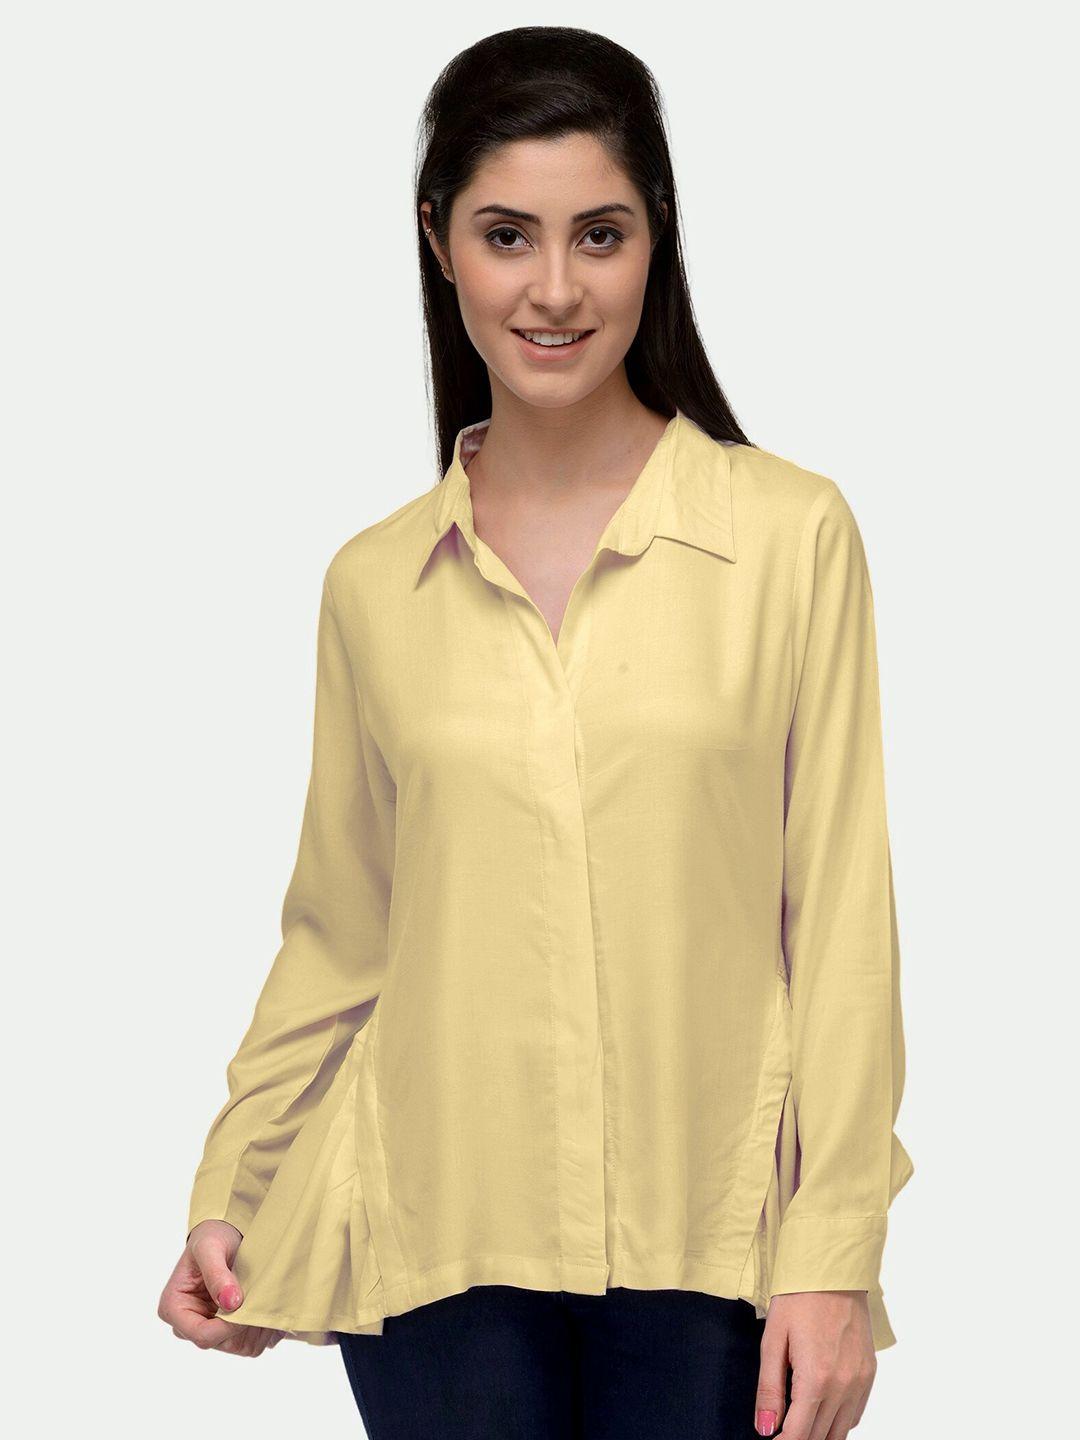 patrorna women gold-toned comfort casual shirt